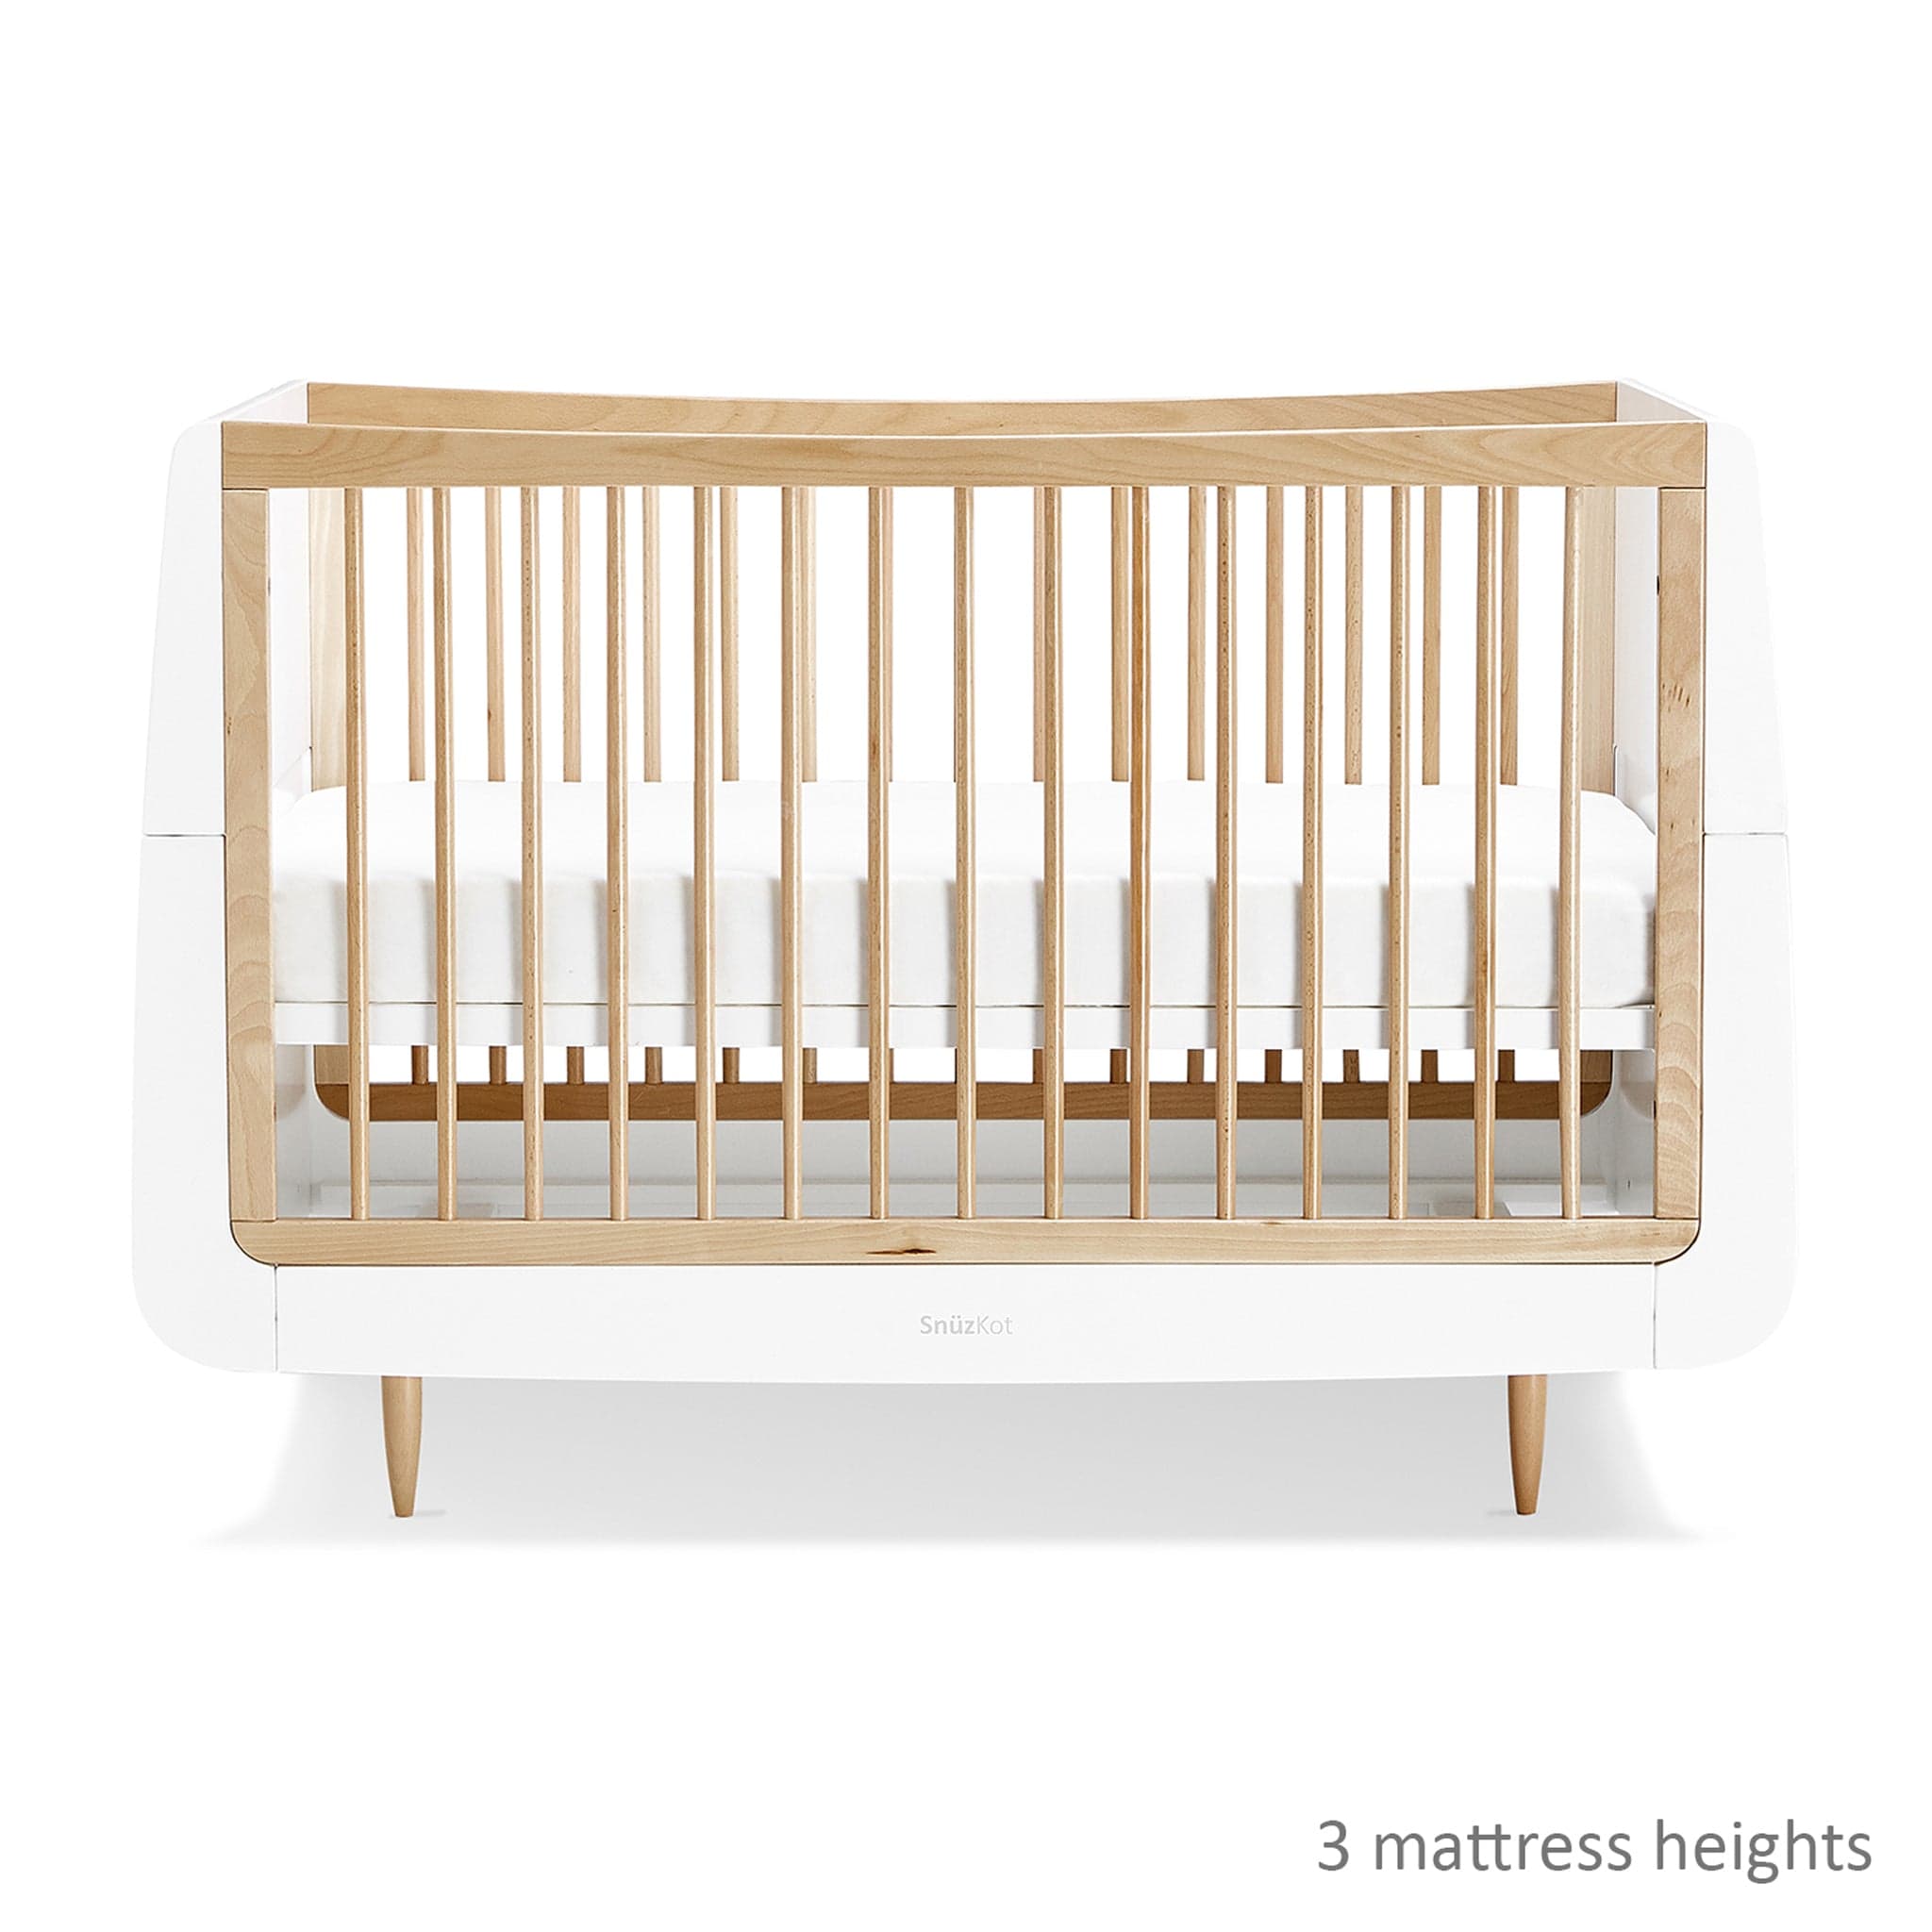 SnüzKot Skandi 3 Piece Nursery Furniture Set in Natural Nursery Room Sets 11304-SK-NAT 5060730242472